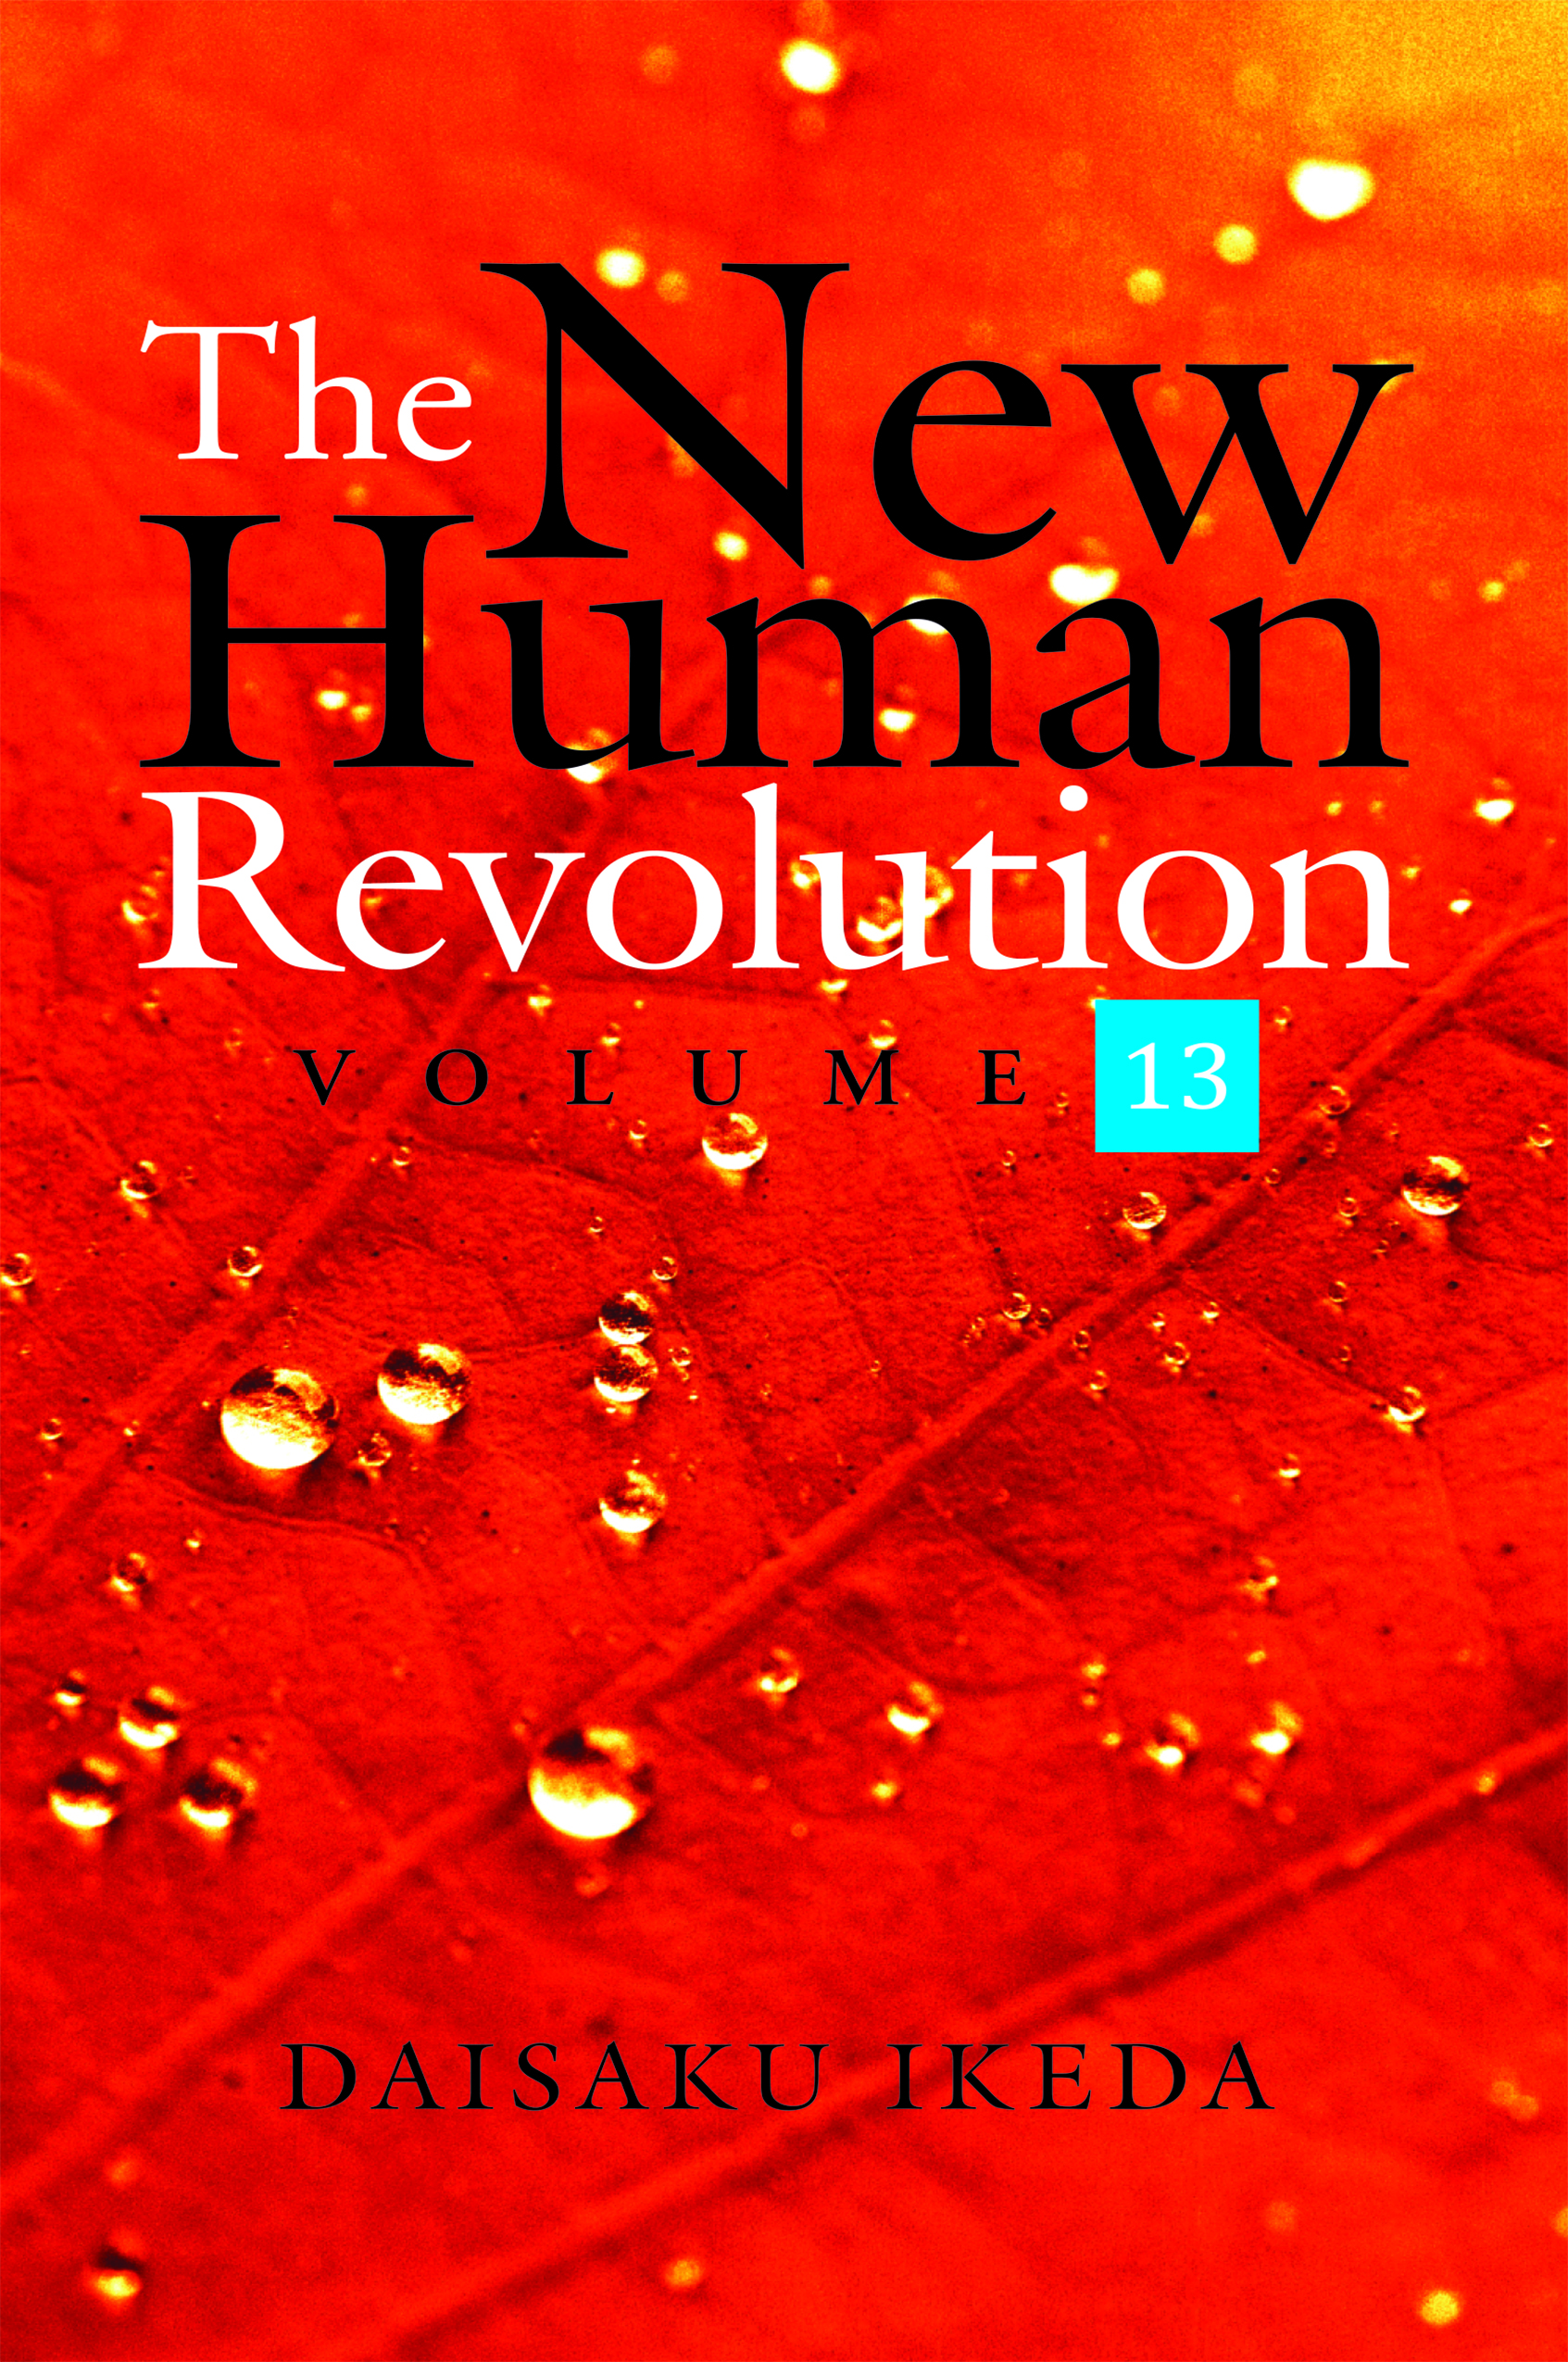 THE NEW HUMAN REVOLUTION VOL 13